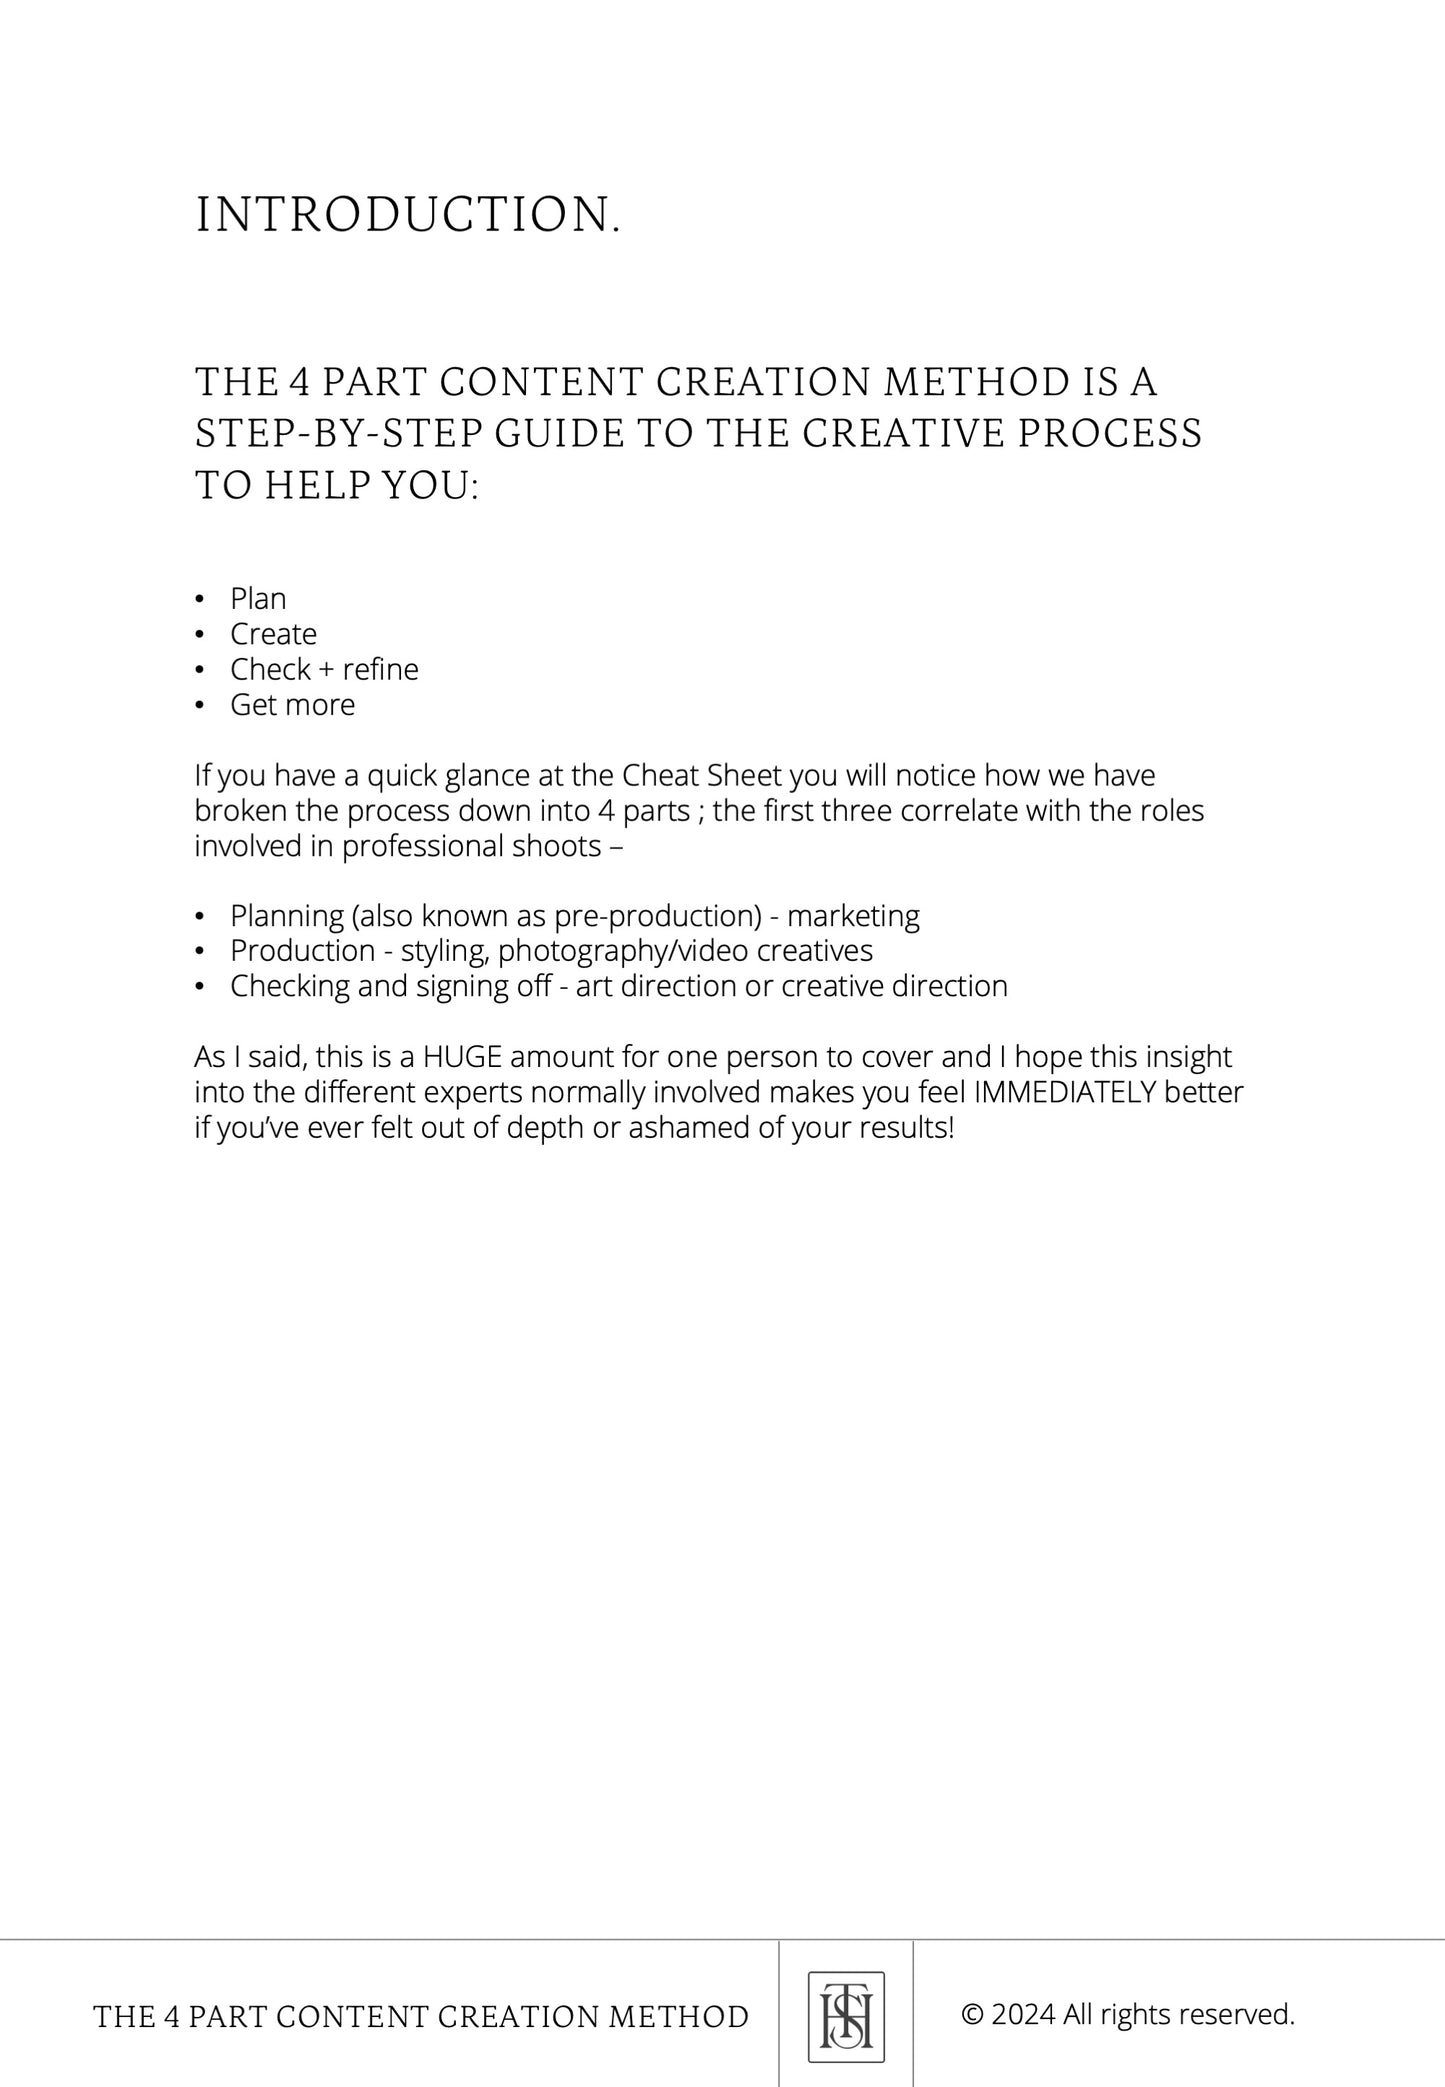 THE STYLING HANDBOOK - 4 PART CONTENT CREATION METHOD